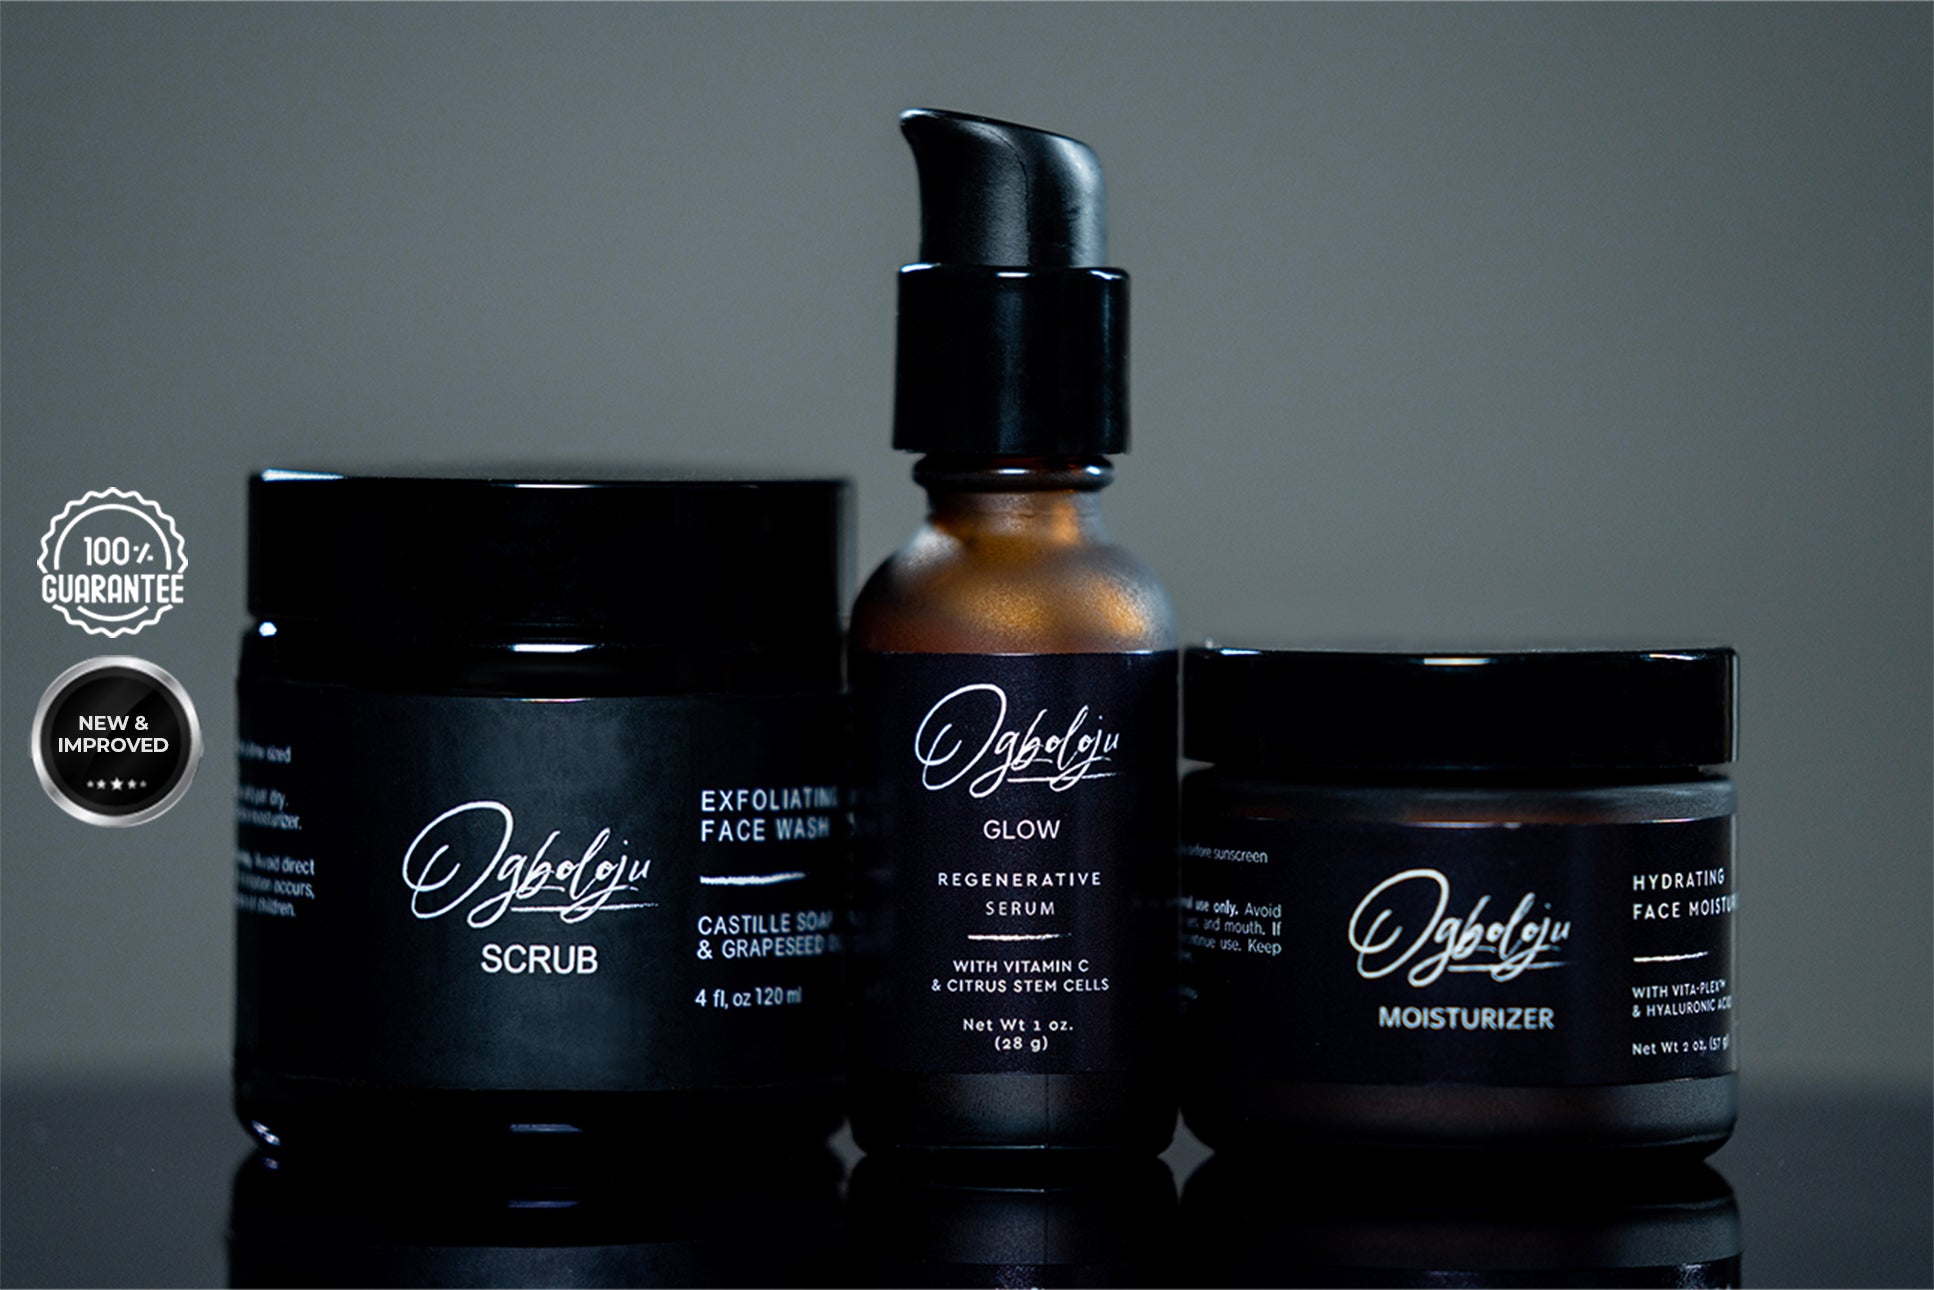 A grey background Landscape image of the Ogboloju 3-step-routine products; Exfoliating Facial wash/scrub, Vitamin C Regenerative Glow serum, hydrating lightweight gel Face moisturize.